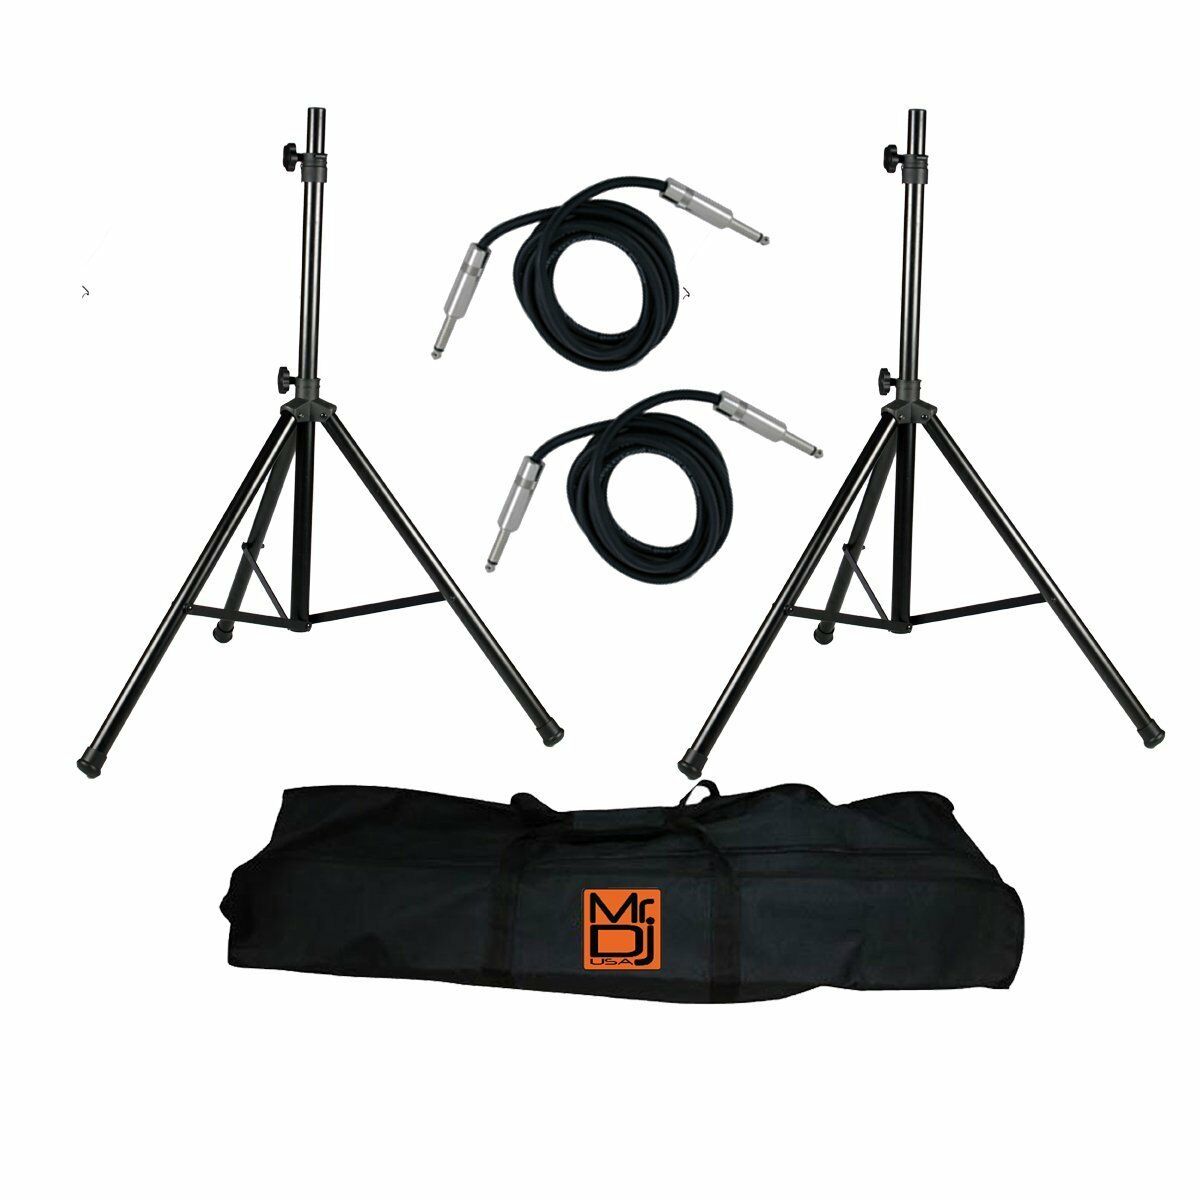 MR DJ SS750PKG Speaker Stand w/ Carrying Bag & 1/4" Cable; Black Folding Tripod PRO PA DJ Home & Stage Speaker Stand Mount Holder w/ Carrying Bag